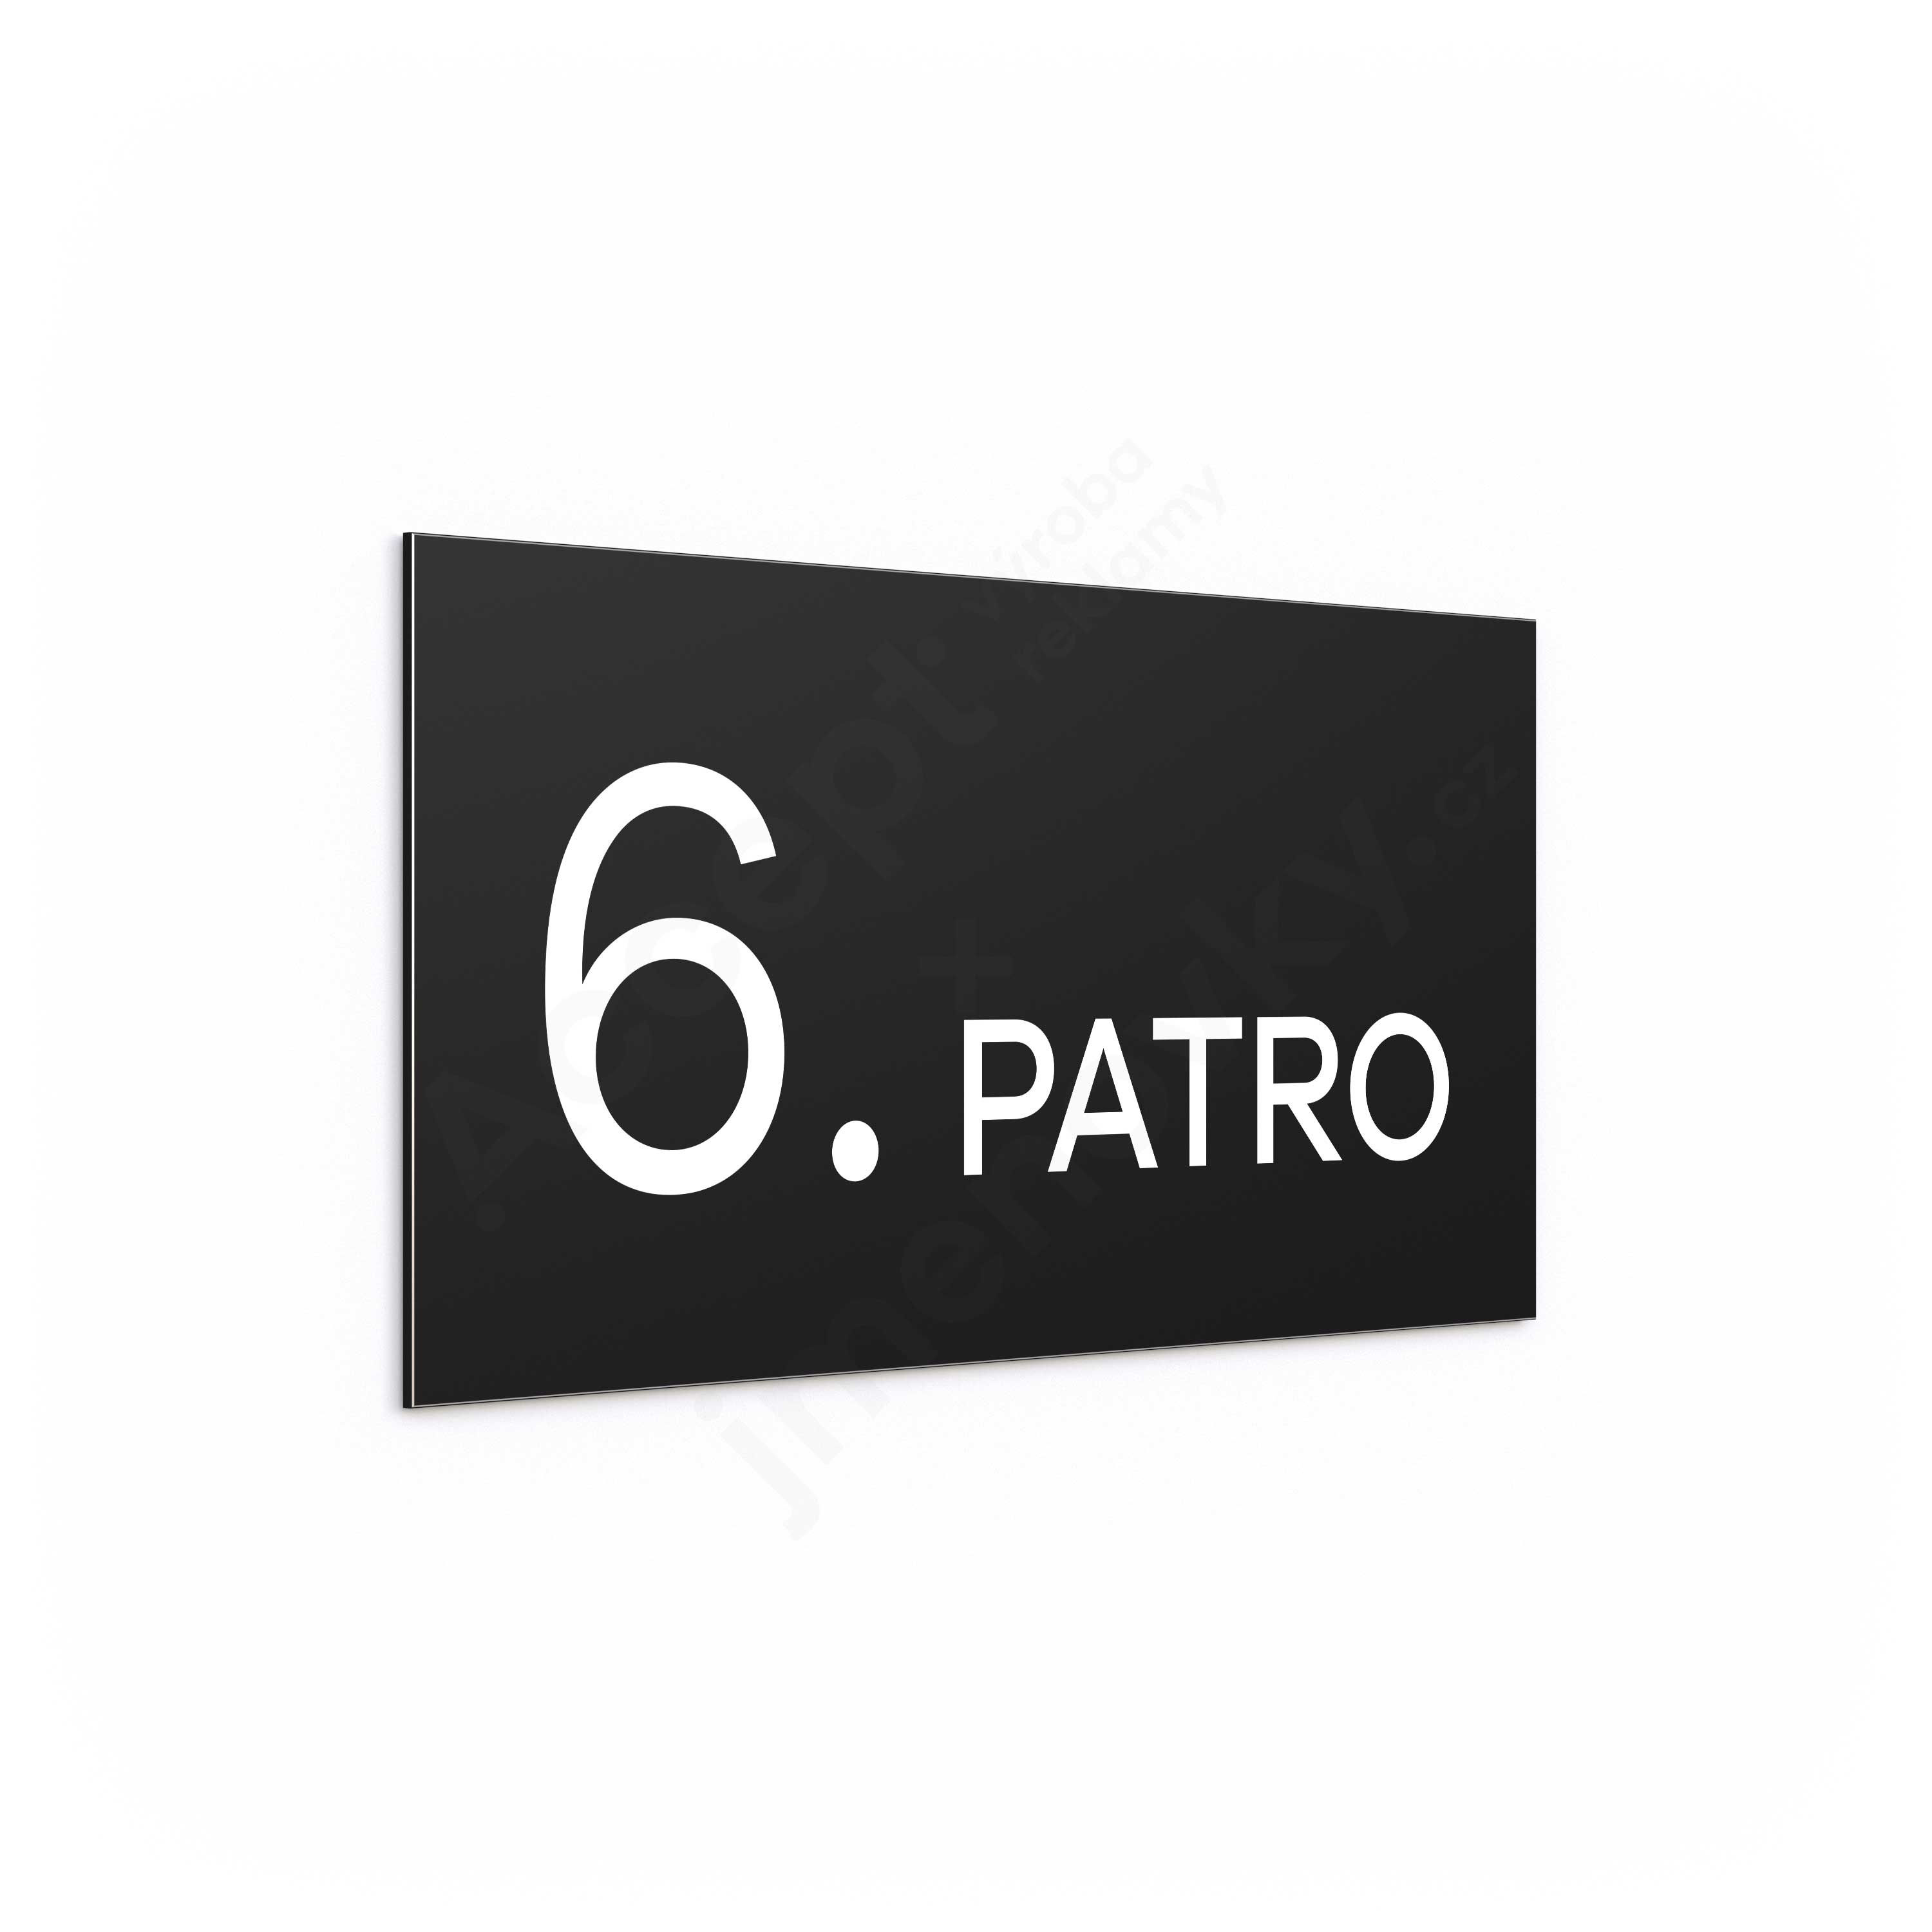 Označení podlaží "6. PATRO" - černá tabulka - bílý popis